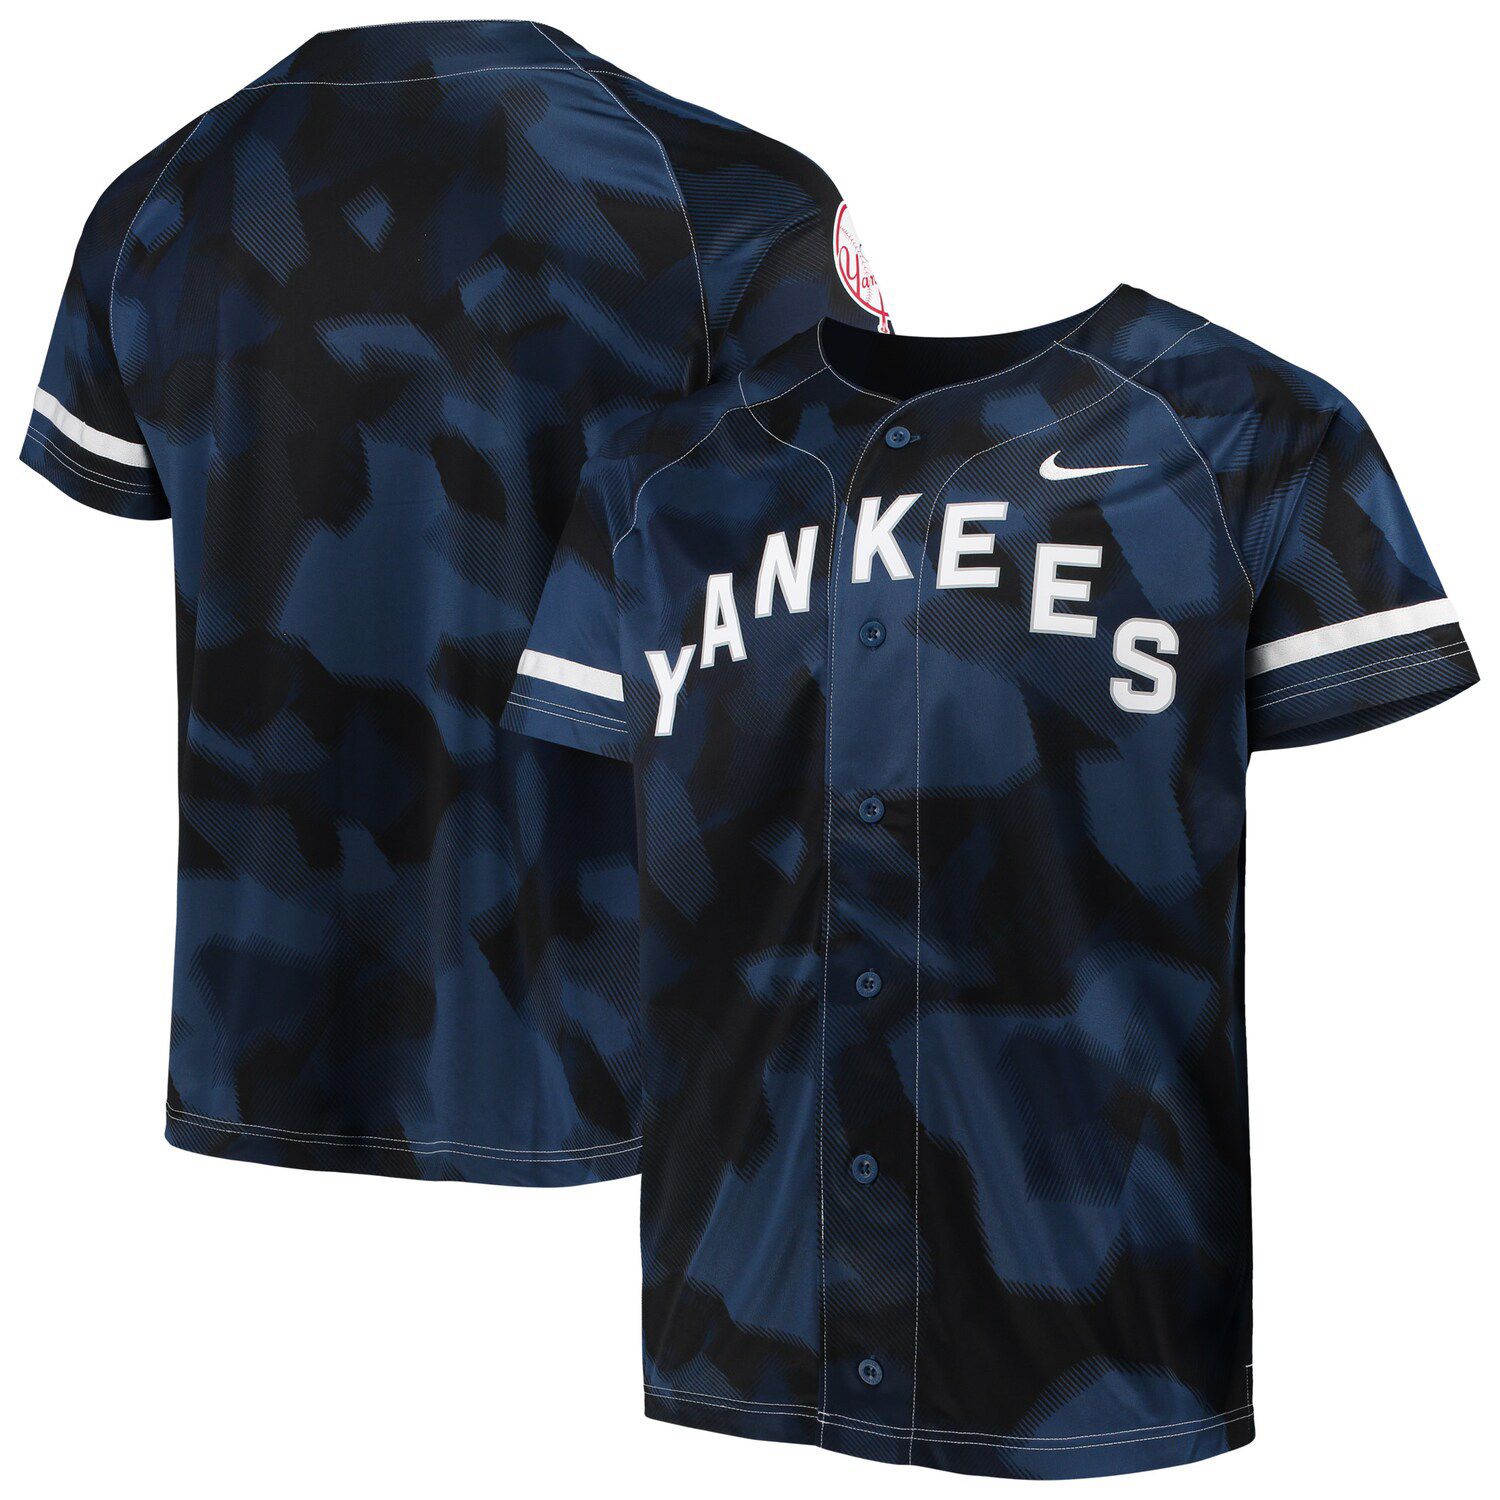 new york yankees camo jersey